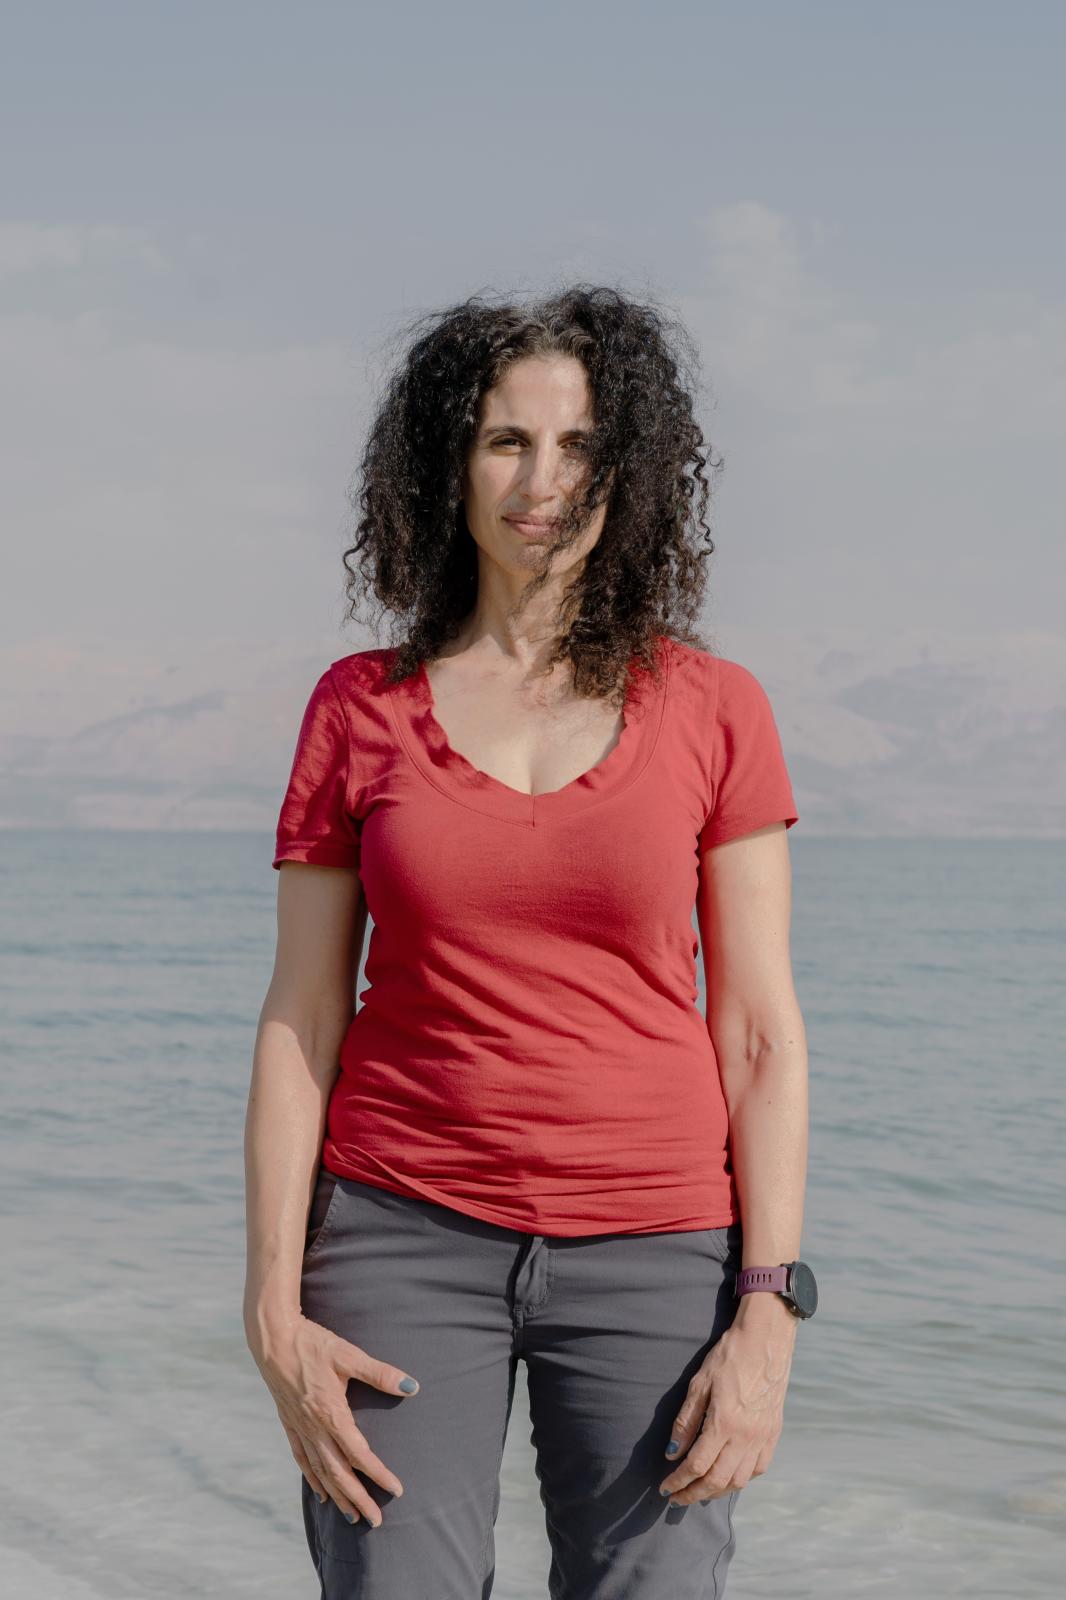 NPR - What is killing the Dead Sea? - Researcher Yael Kiro from Israel's Weizmann Institute...